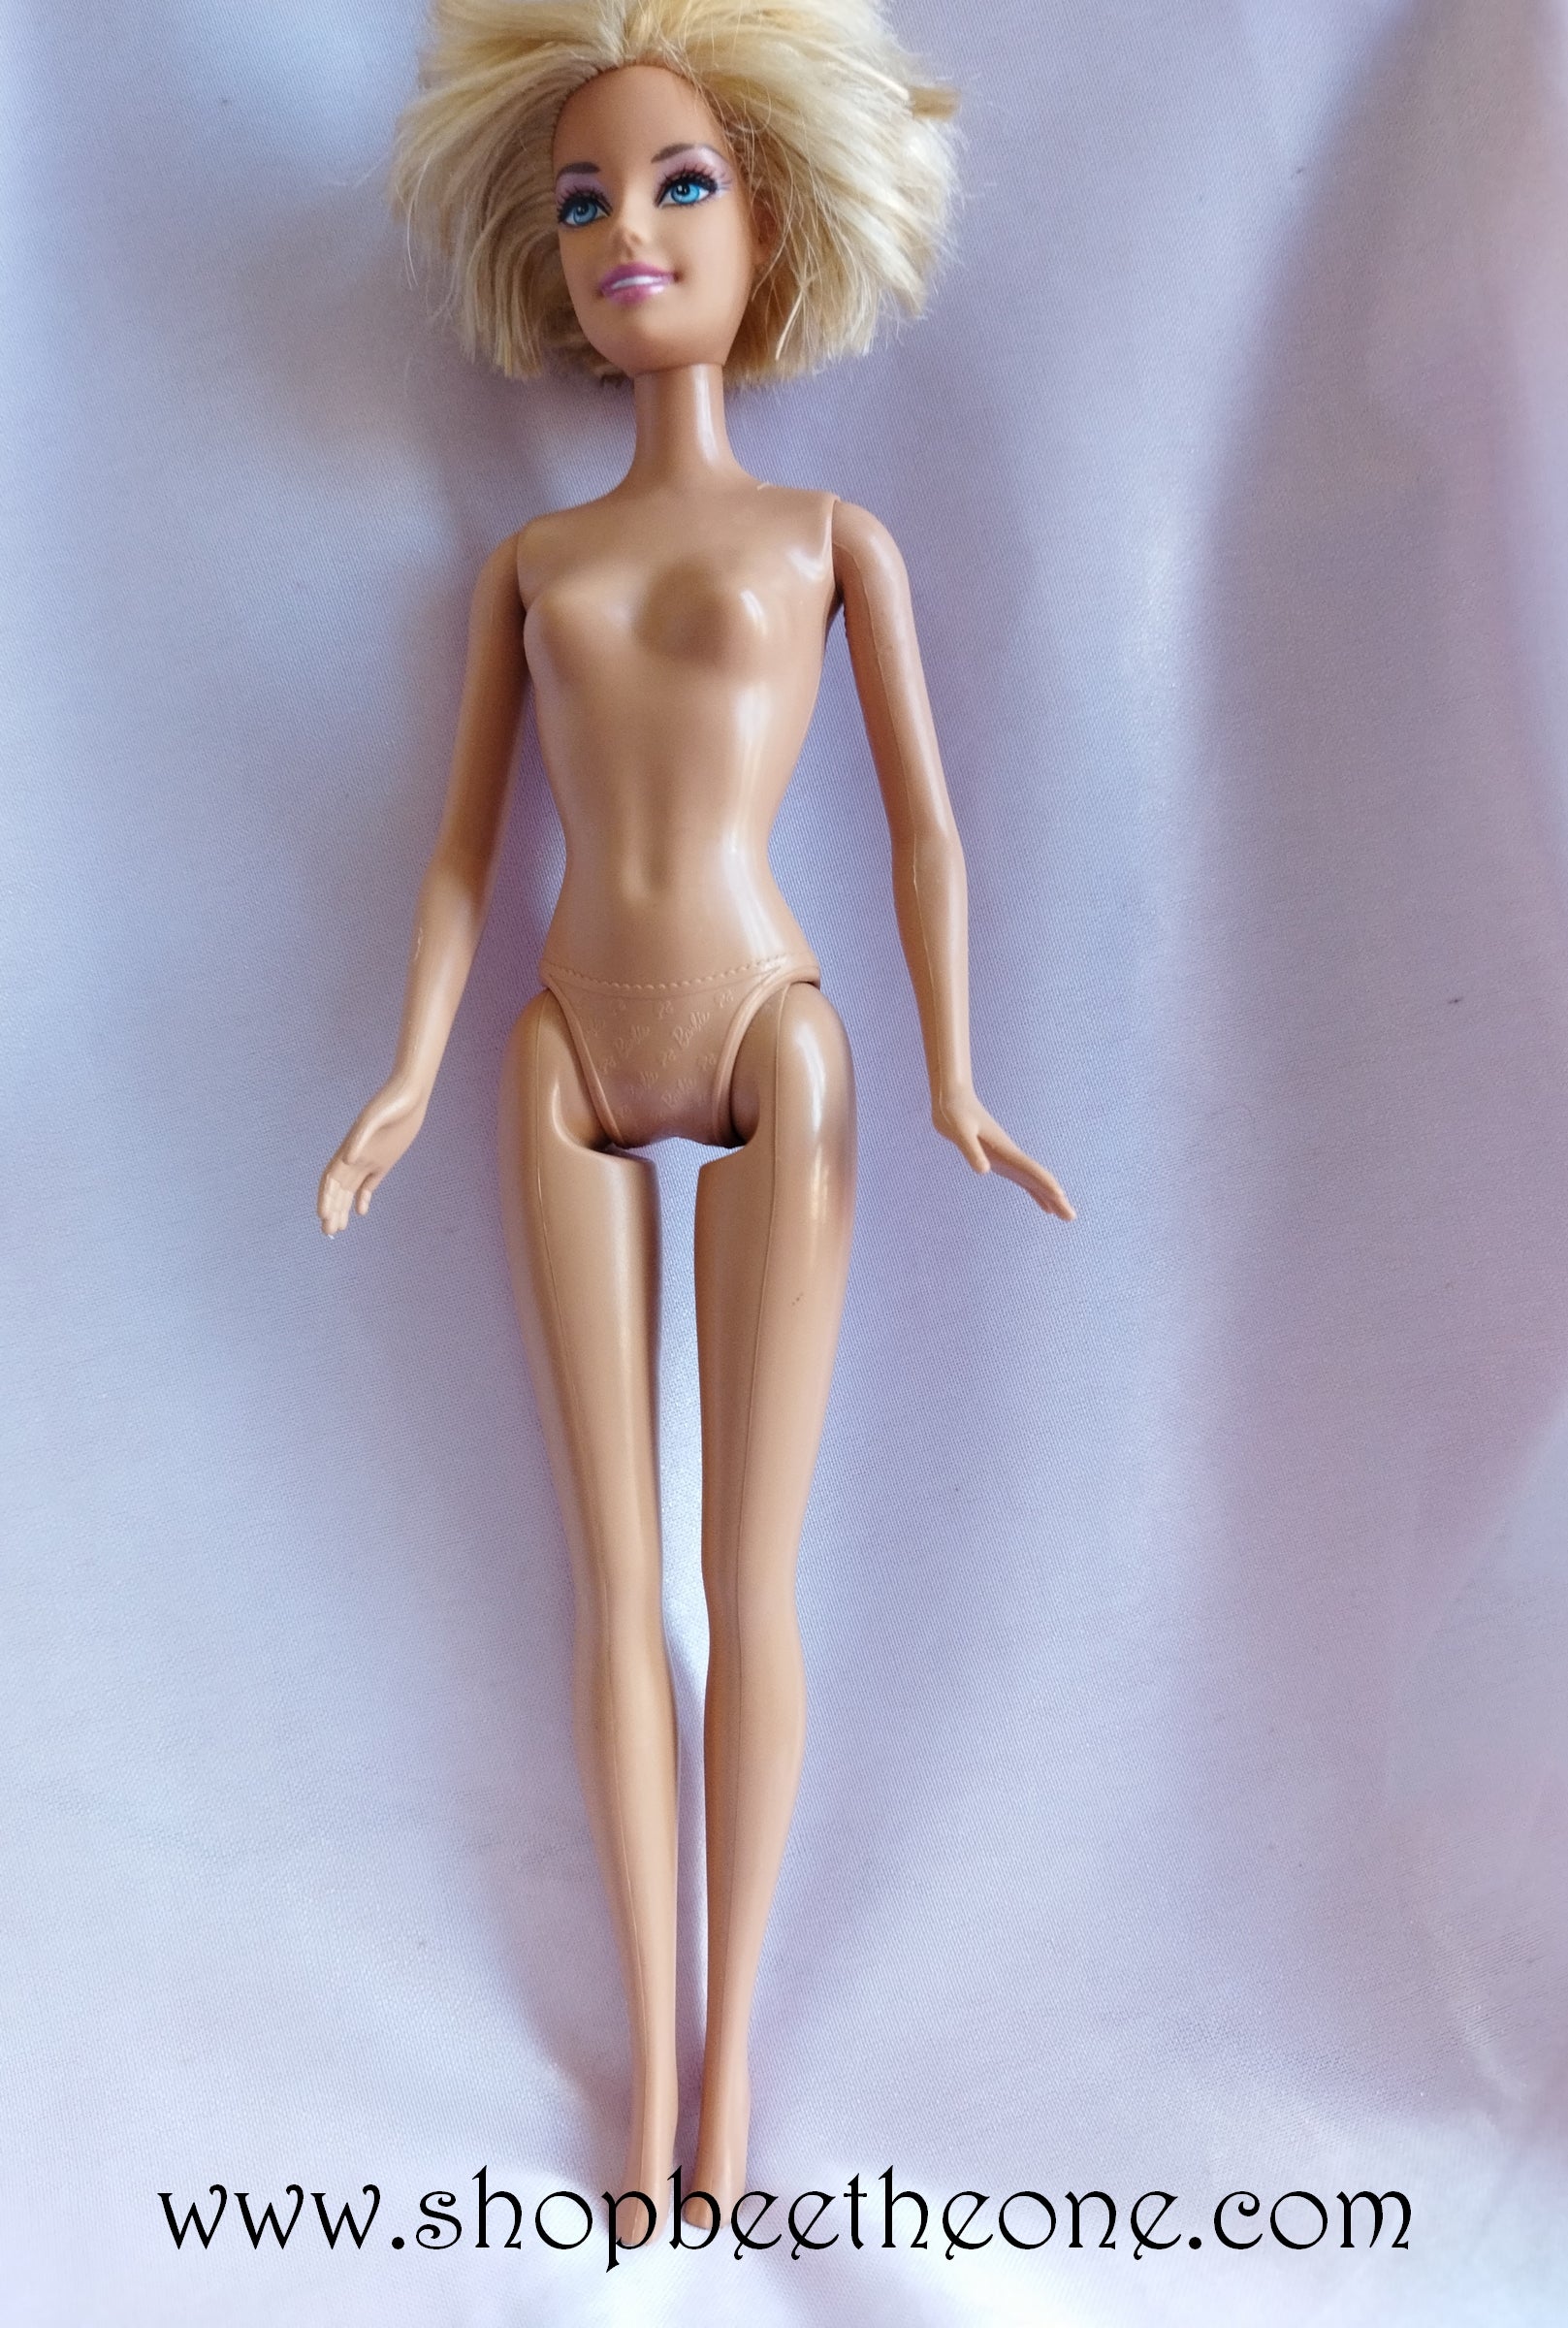 Barbie Princesse Longue Chevelure (Cut 'n Style Princess) - Mattel